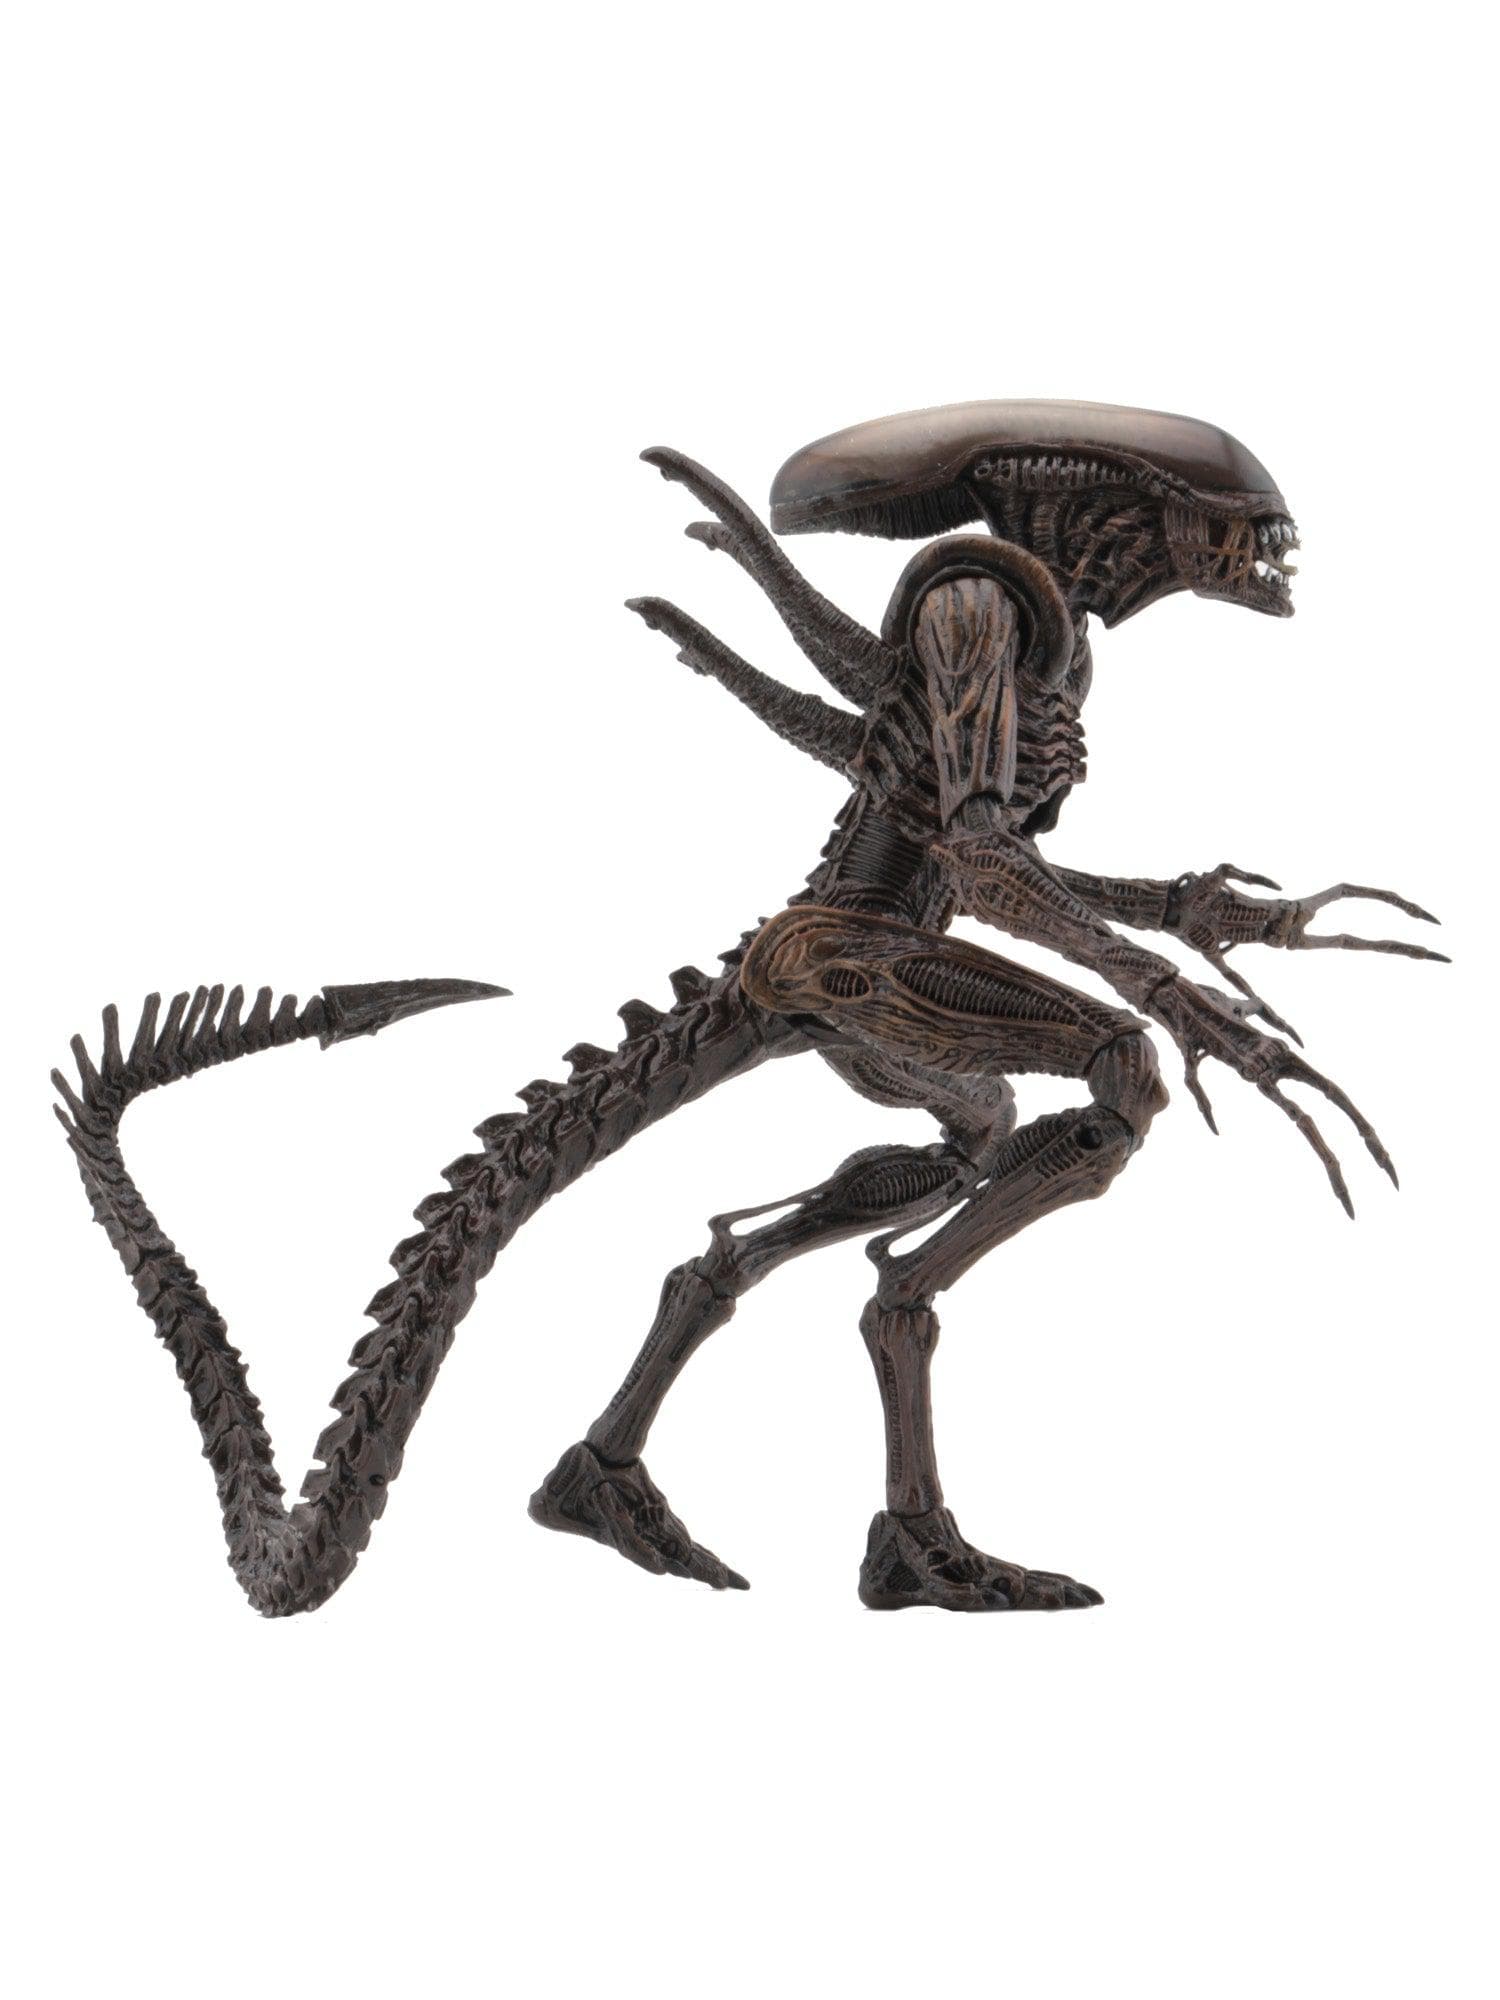 NECA - Aliens - 7" Scale Action Figure - Series 14 Alien Resurrection Warrior - costumes.com